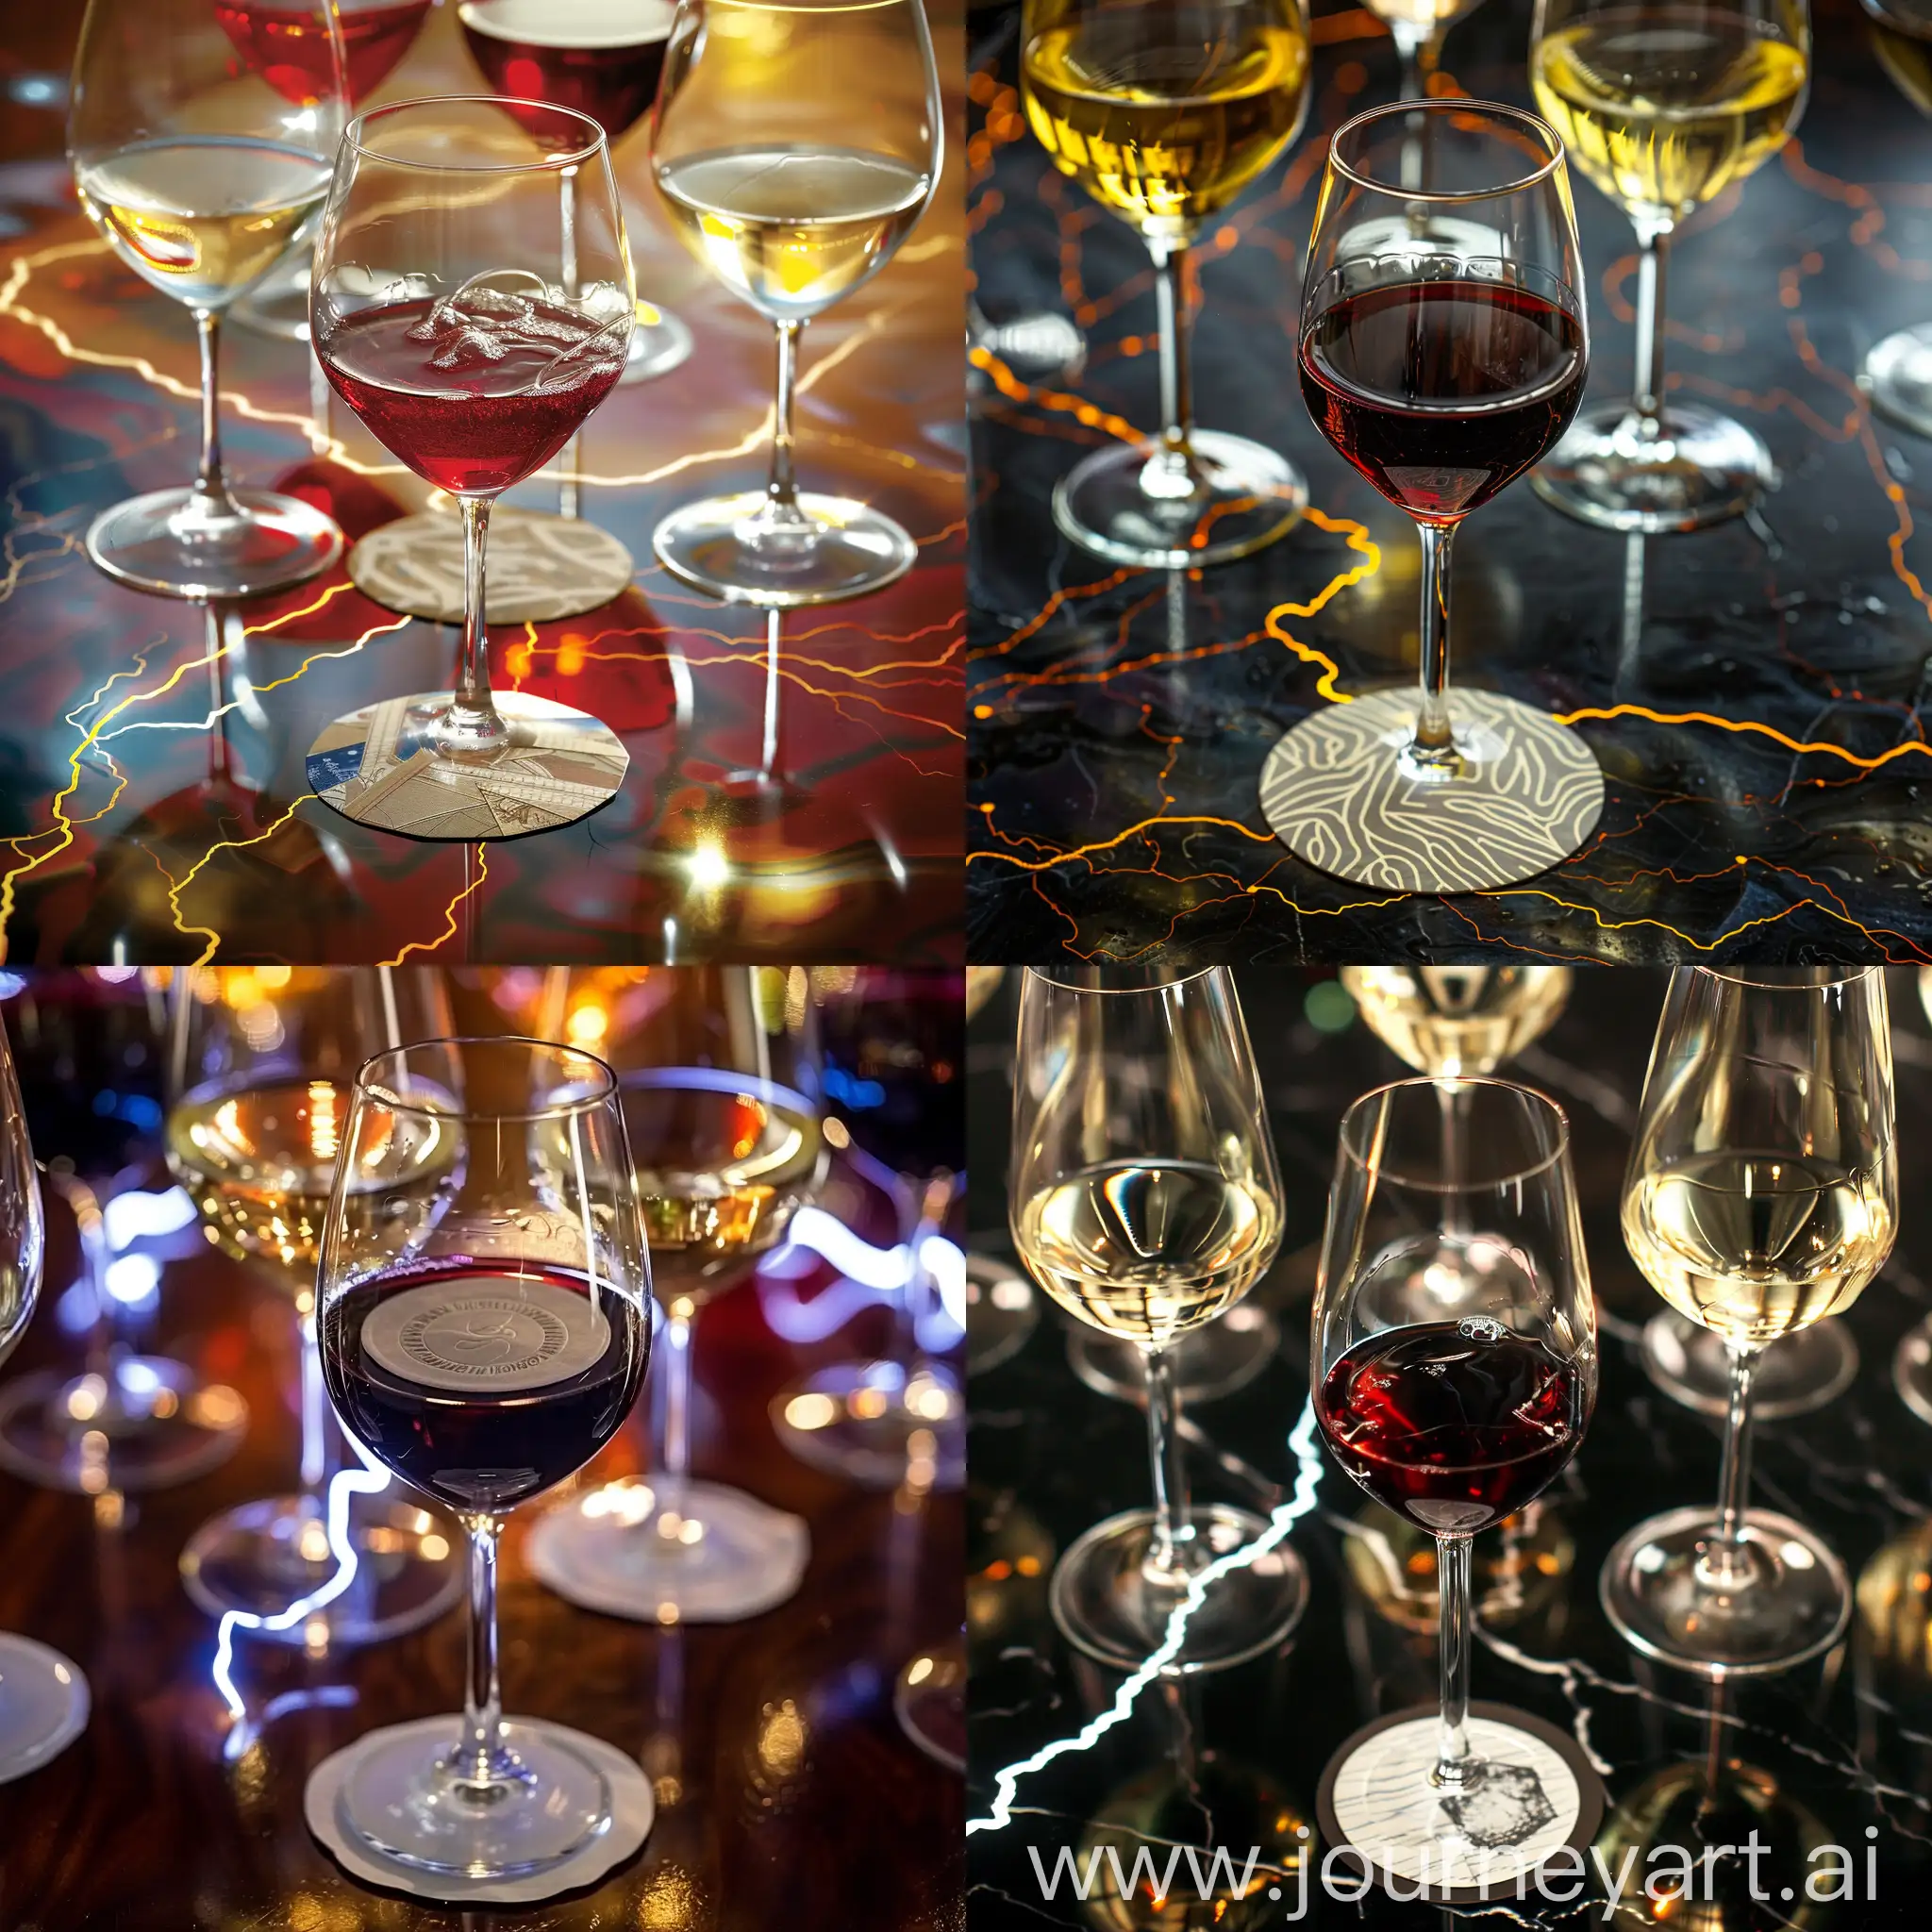 Elegant-Wine-Tasting-Setting-with-Dramatic-Lighting